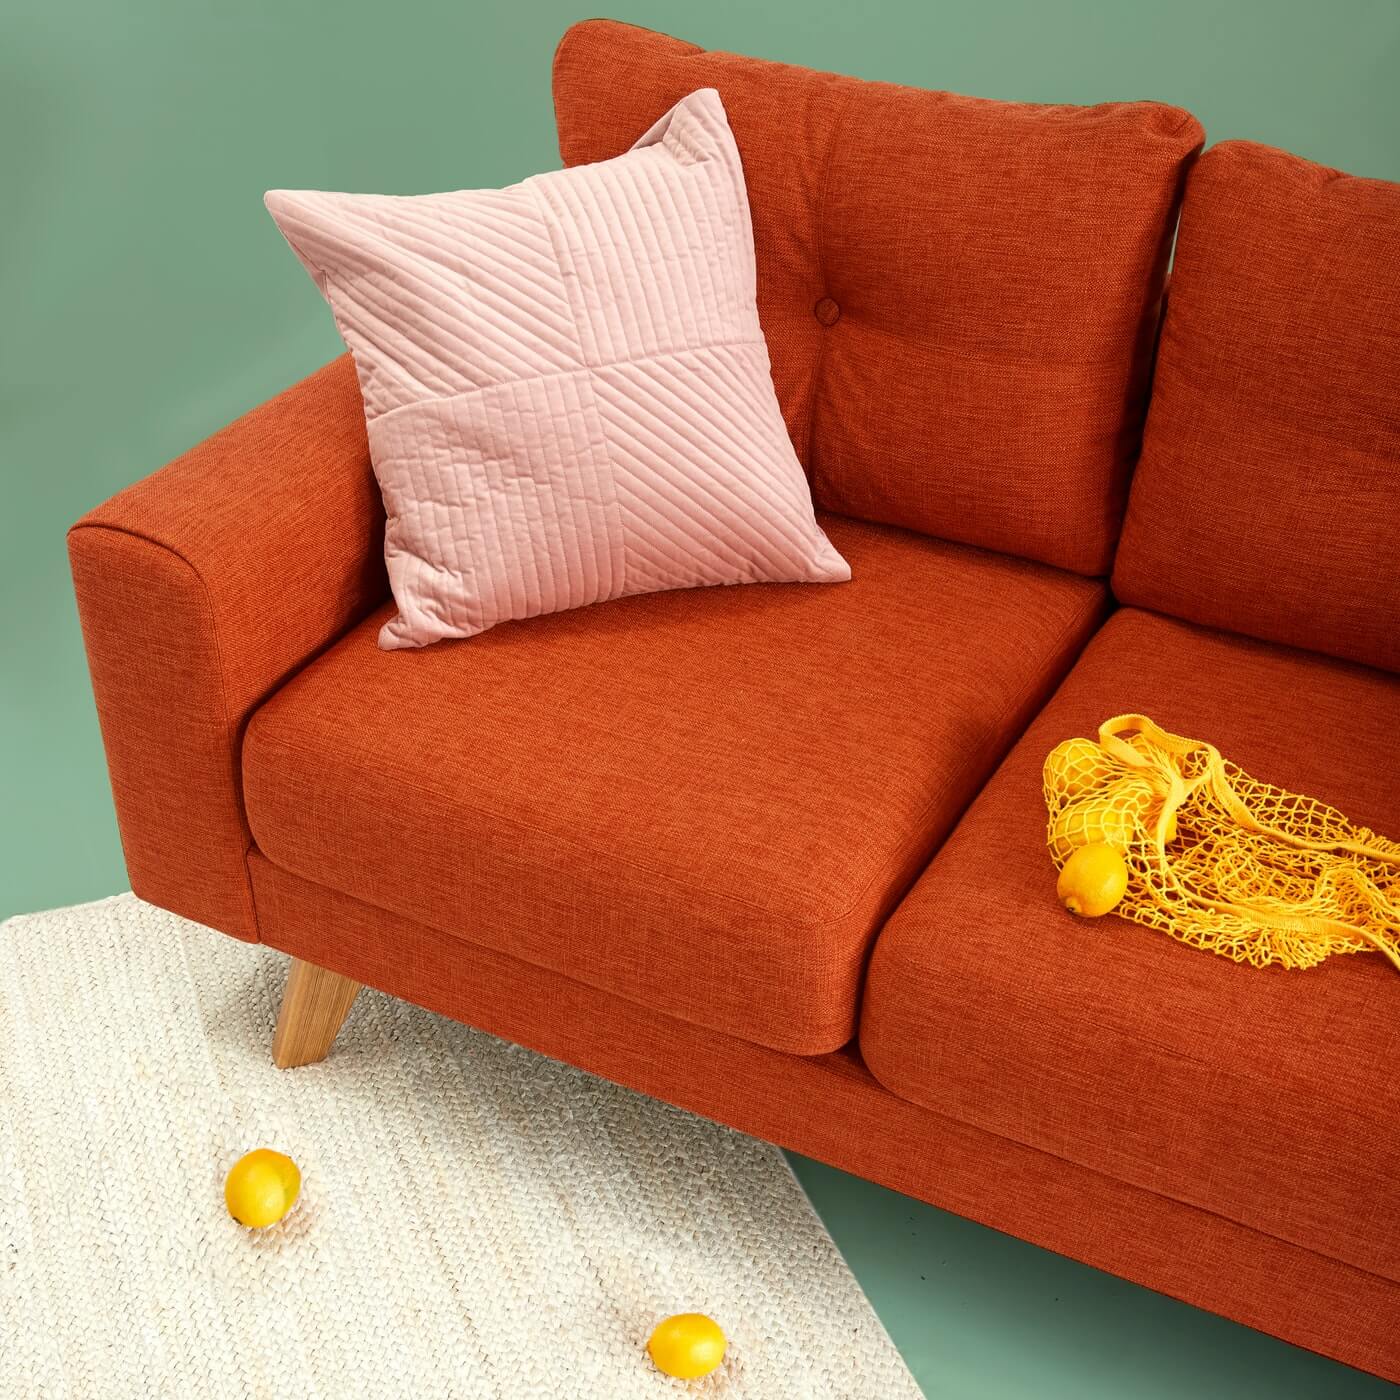 Image of an orange sofa